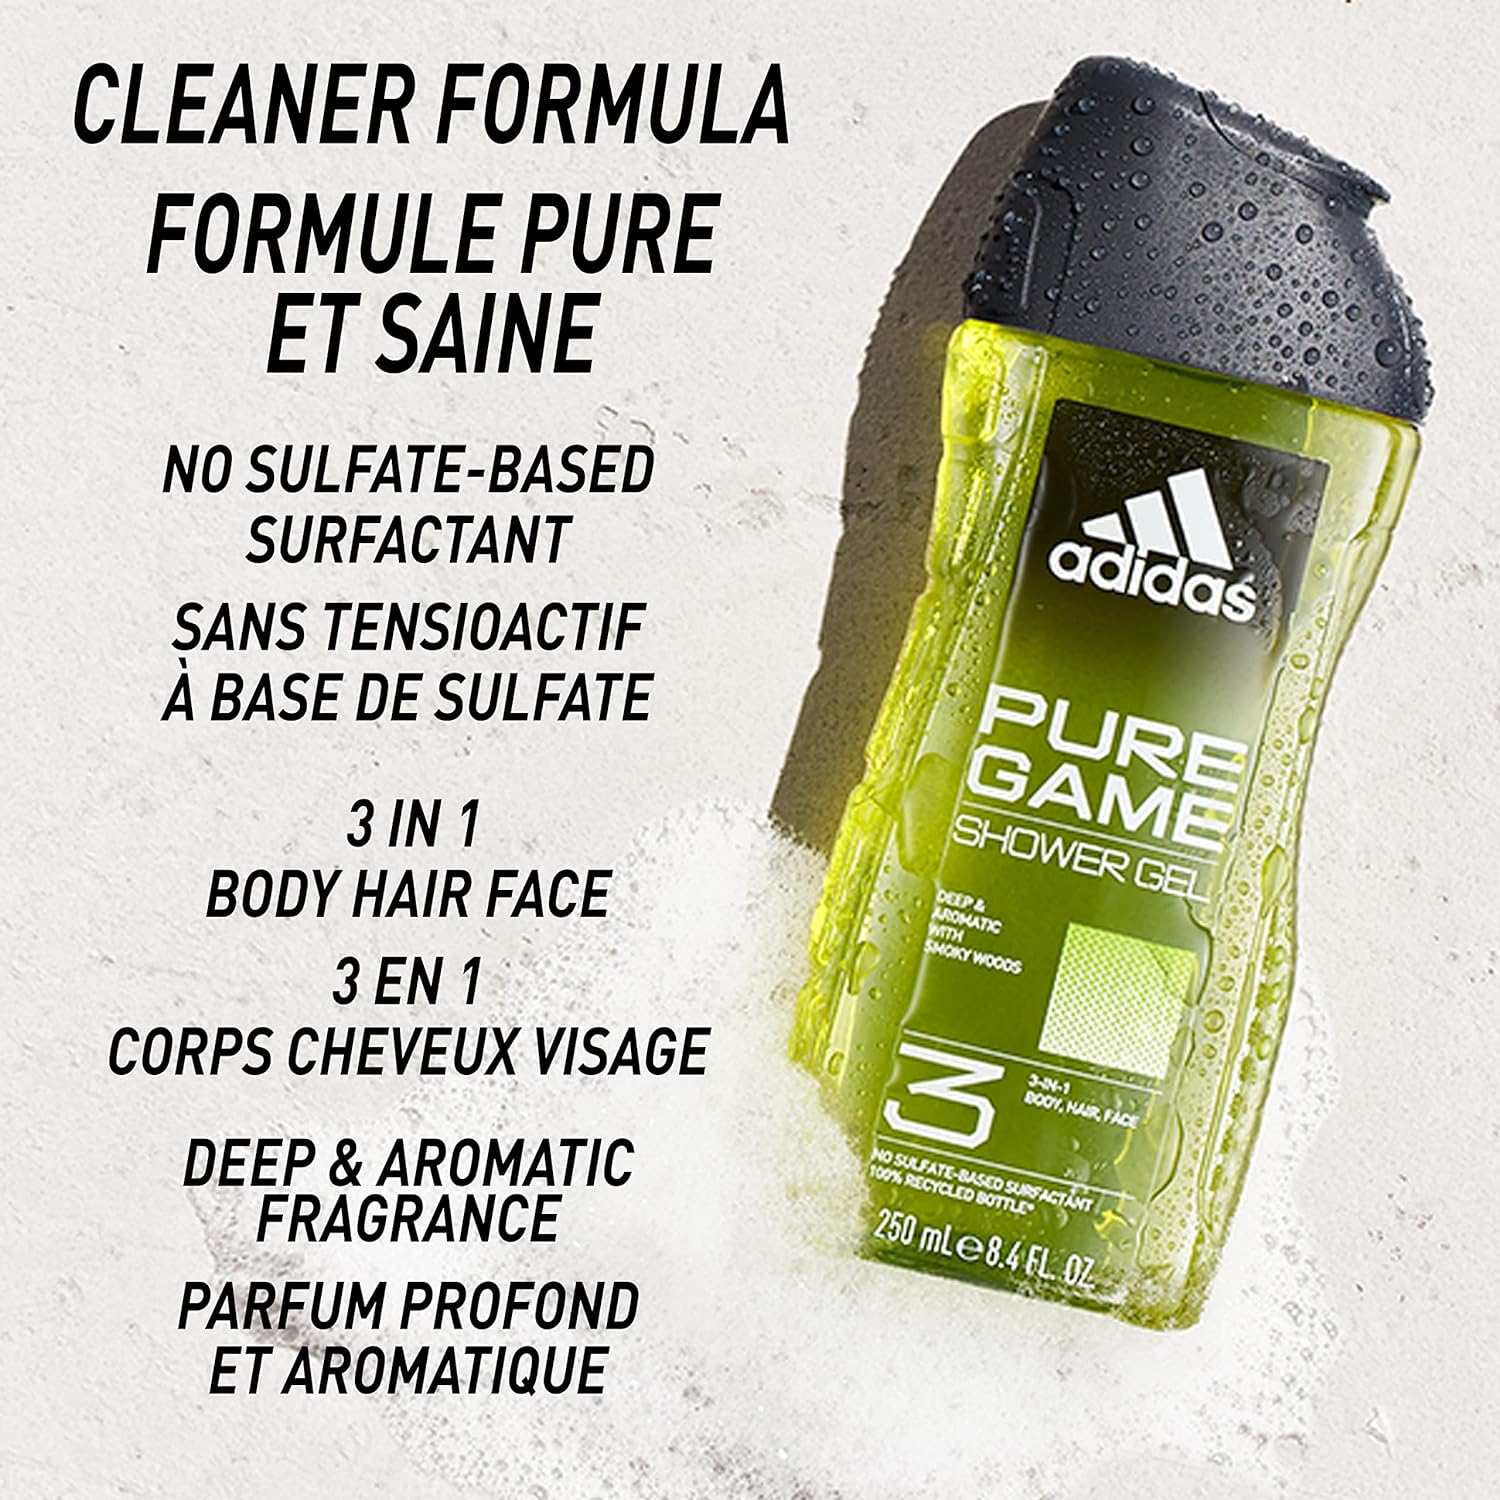 Adidas Pure Game Men Shower Gel (400ml)